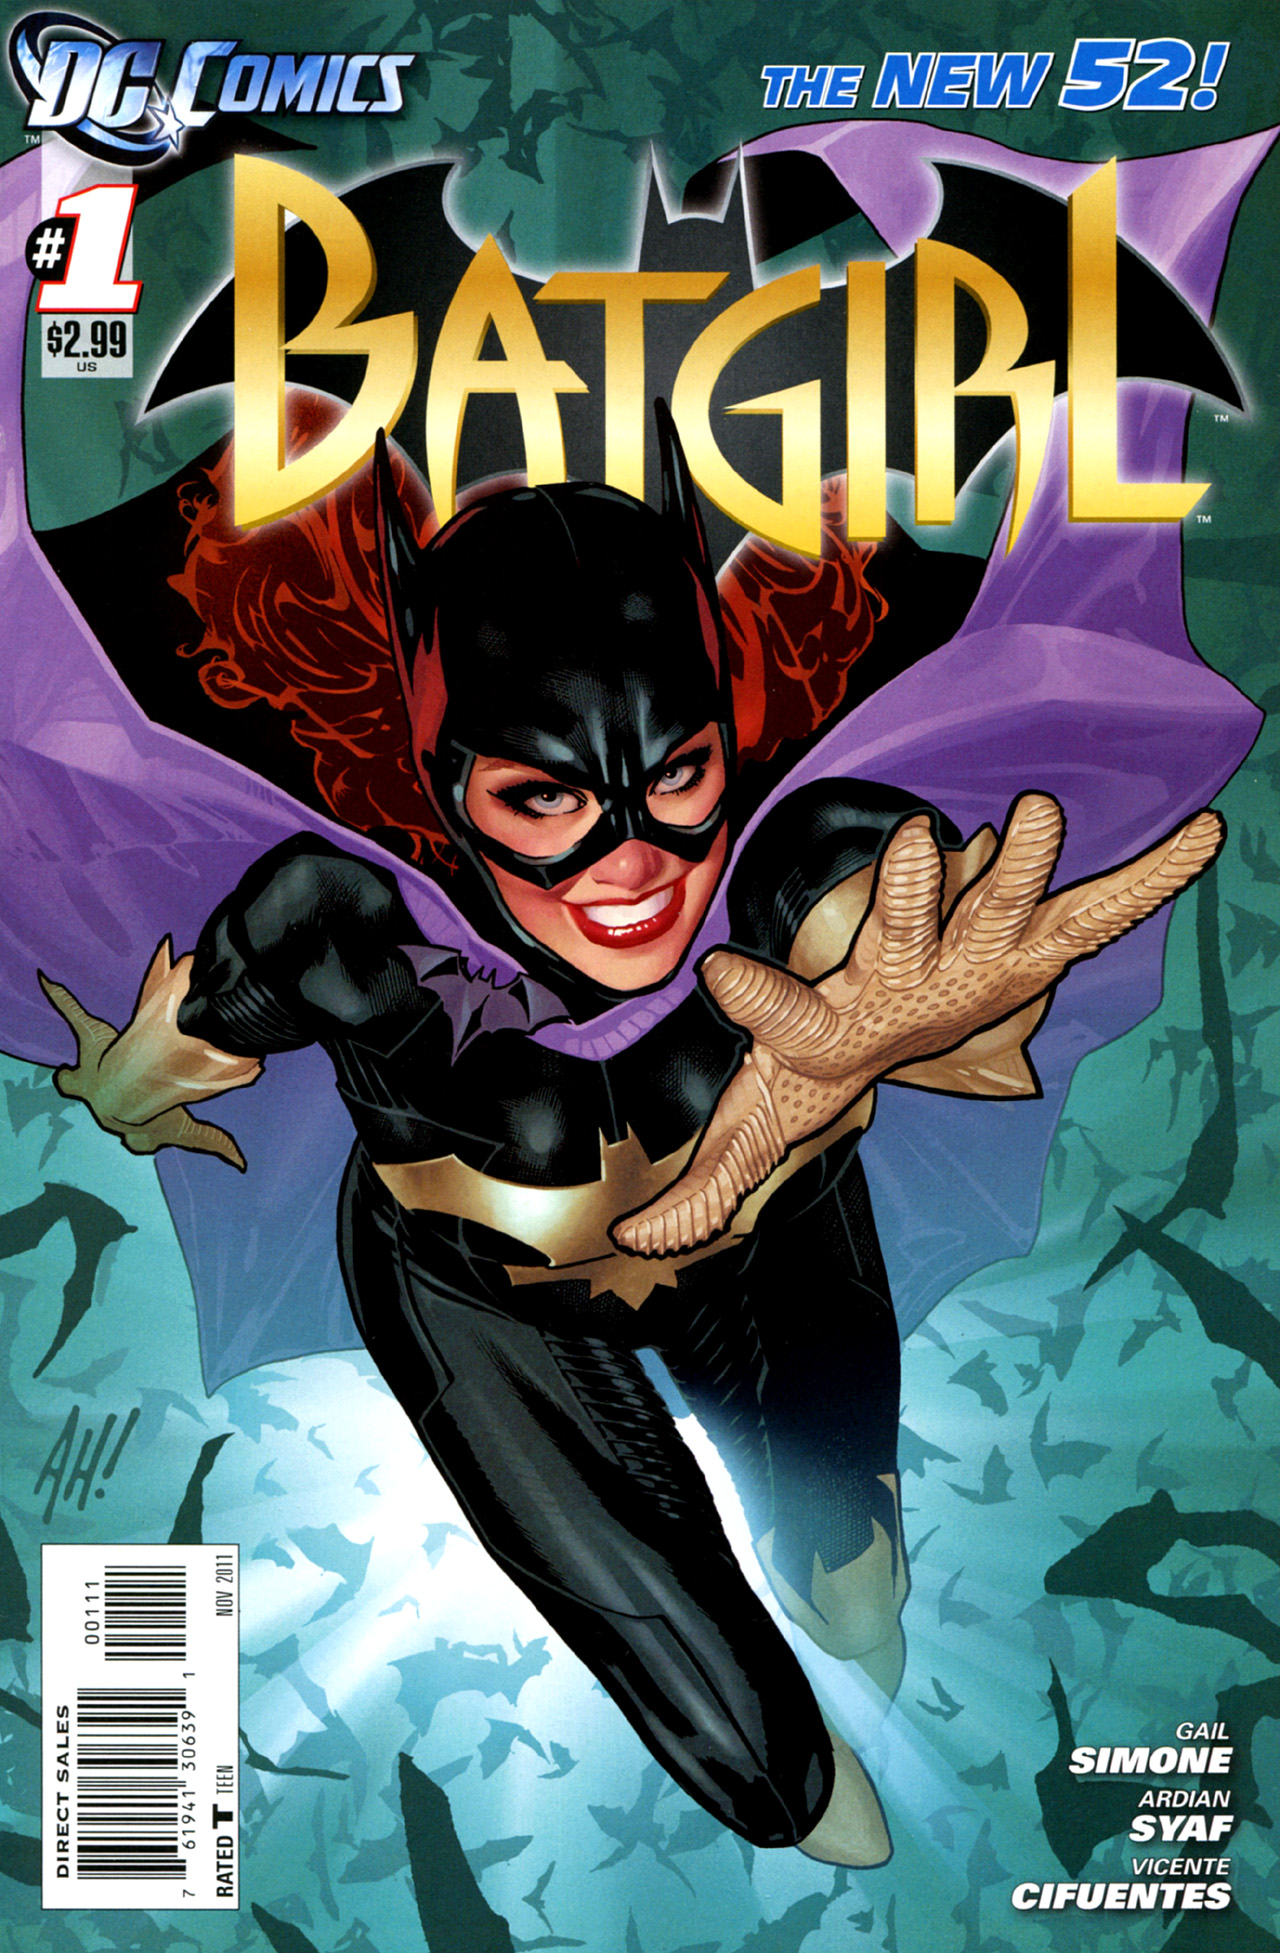 The New 52: Batgirl #1